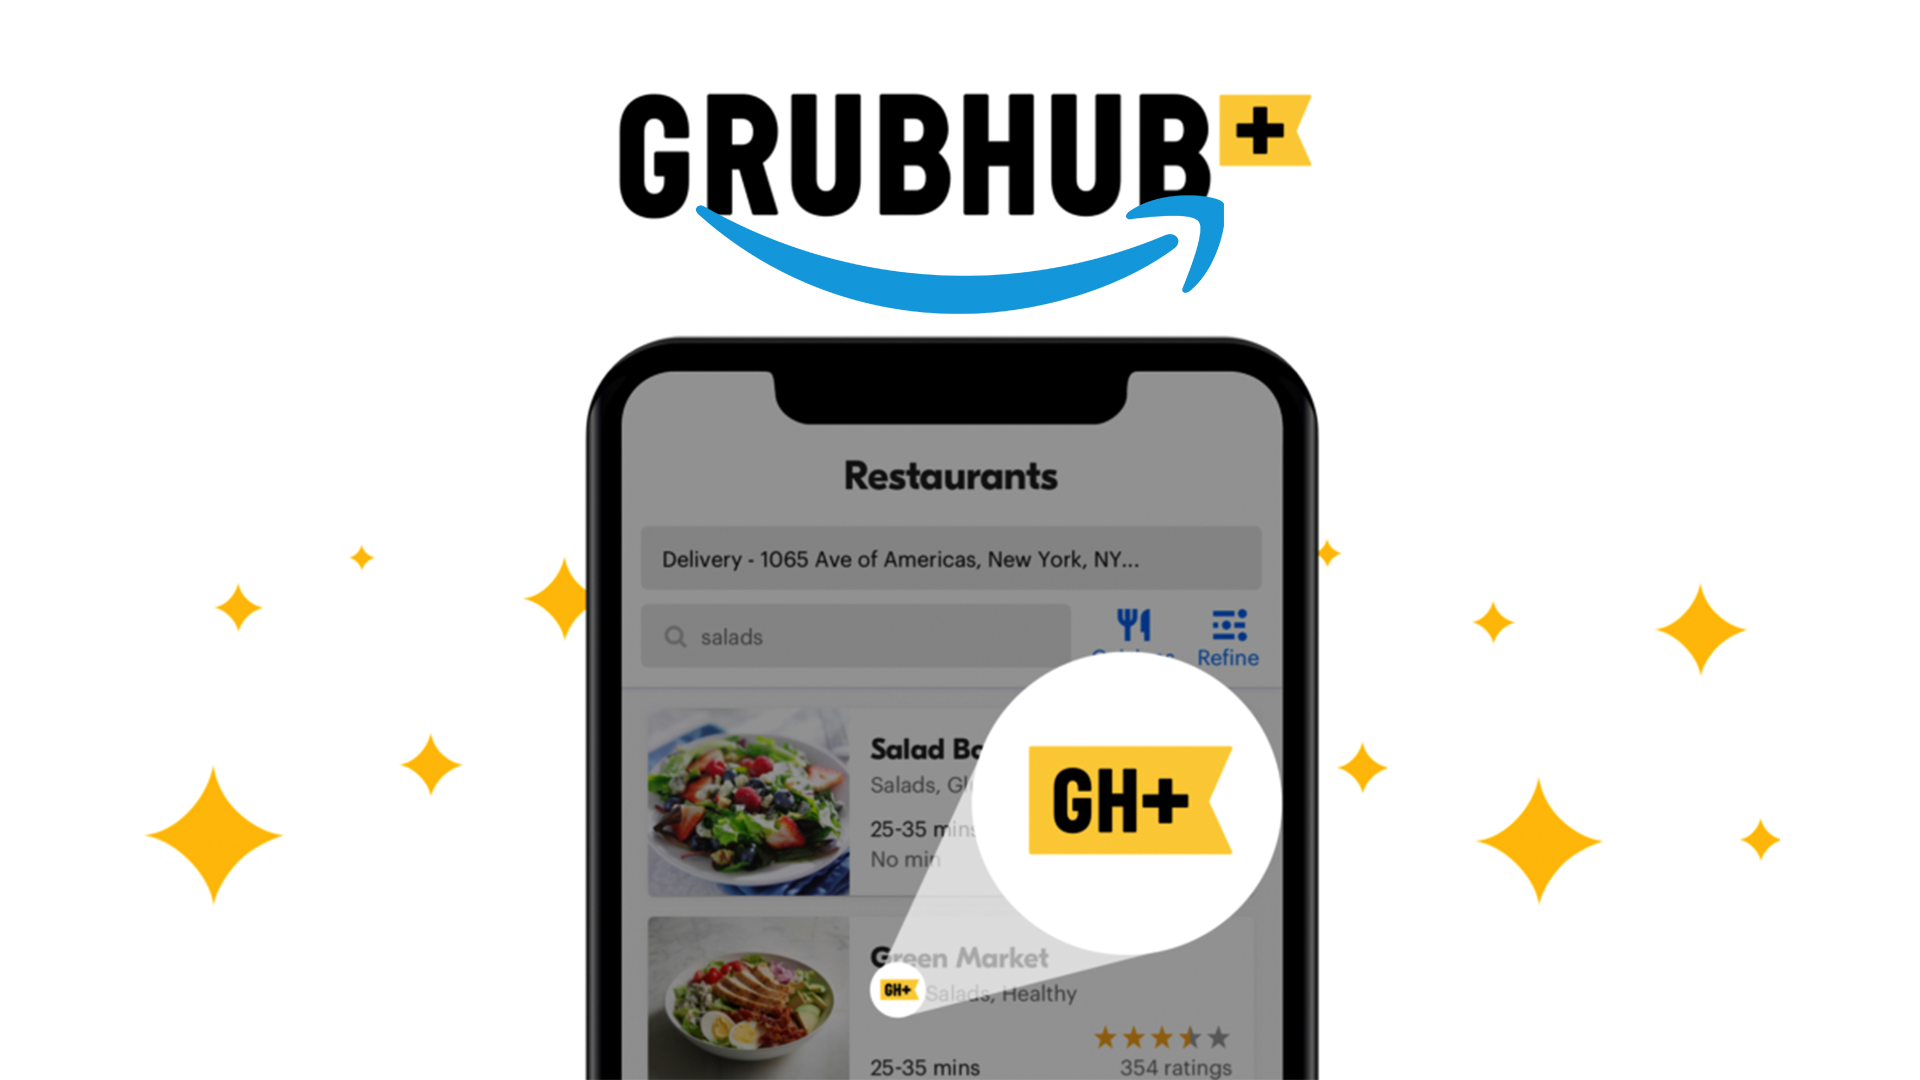 Free GrubHub+ with Prime membership benefit